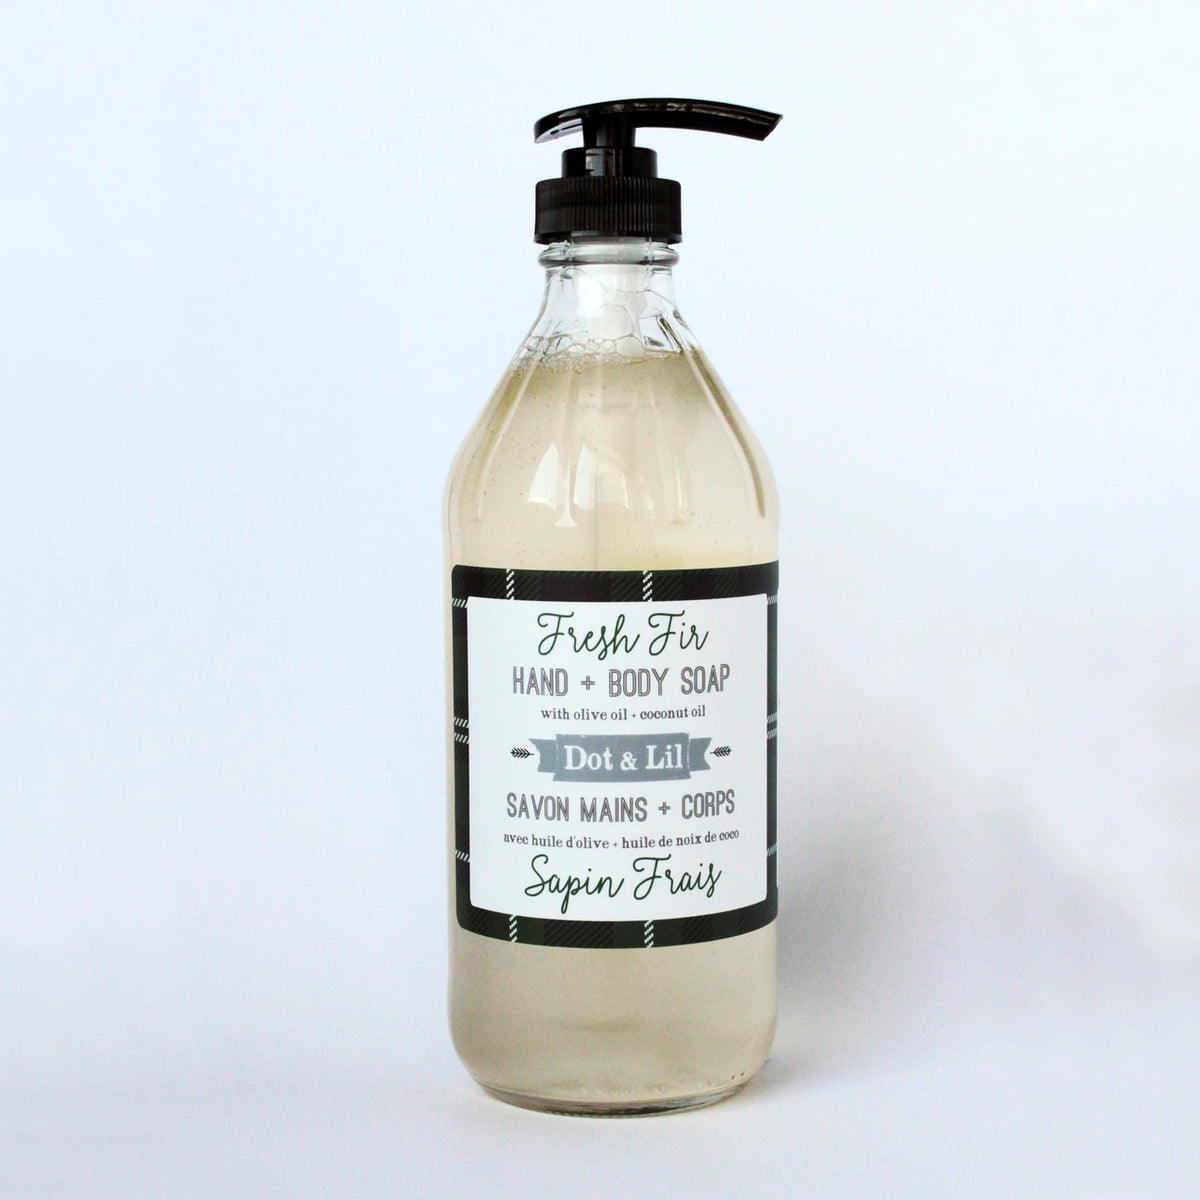 A transparent pump bottle labeled "Dot & Lil Fresh Fir Liquid Soap" containing light amber liquid soap, against a white background.